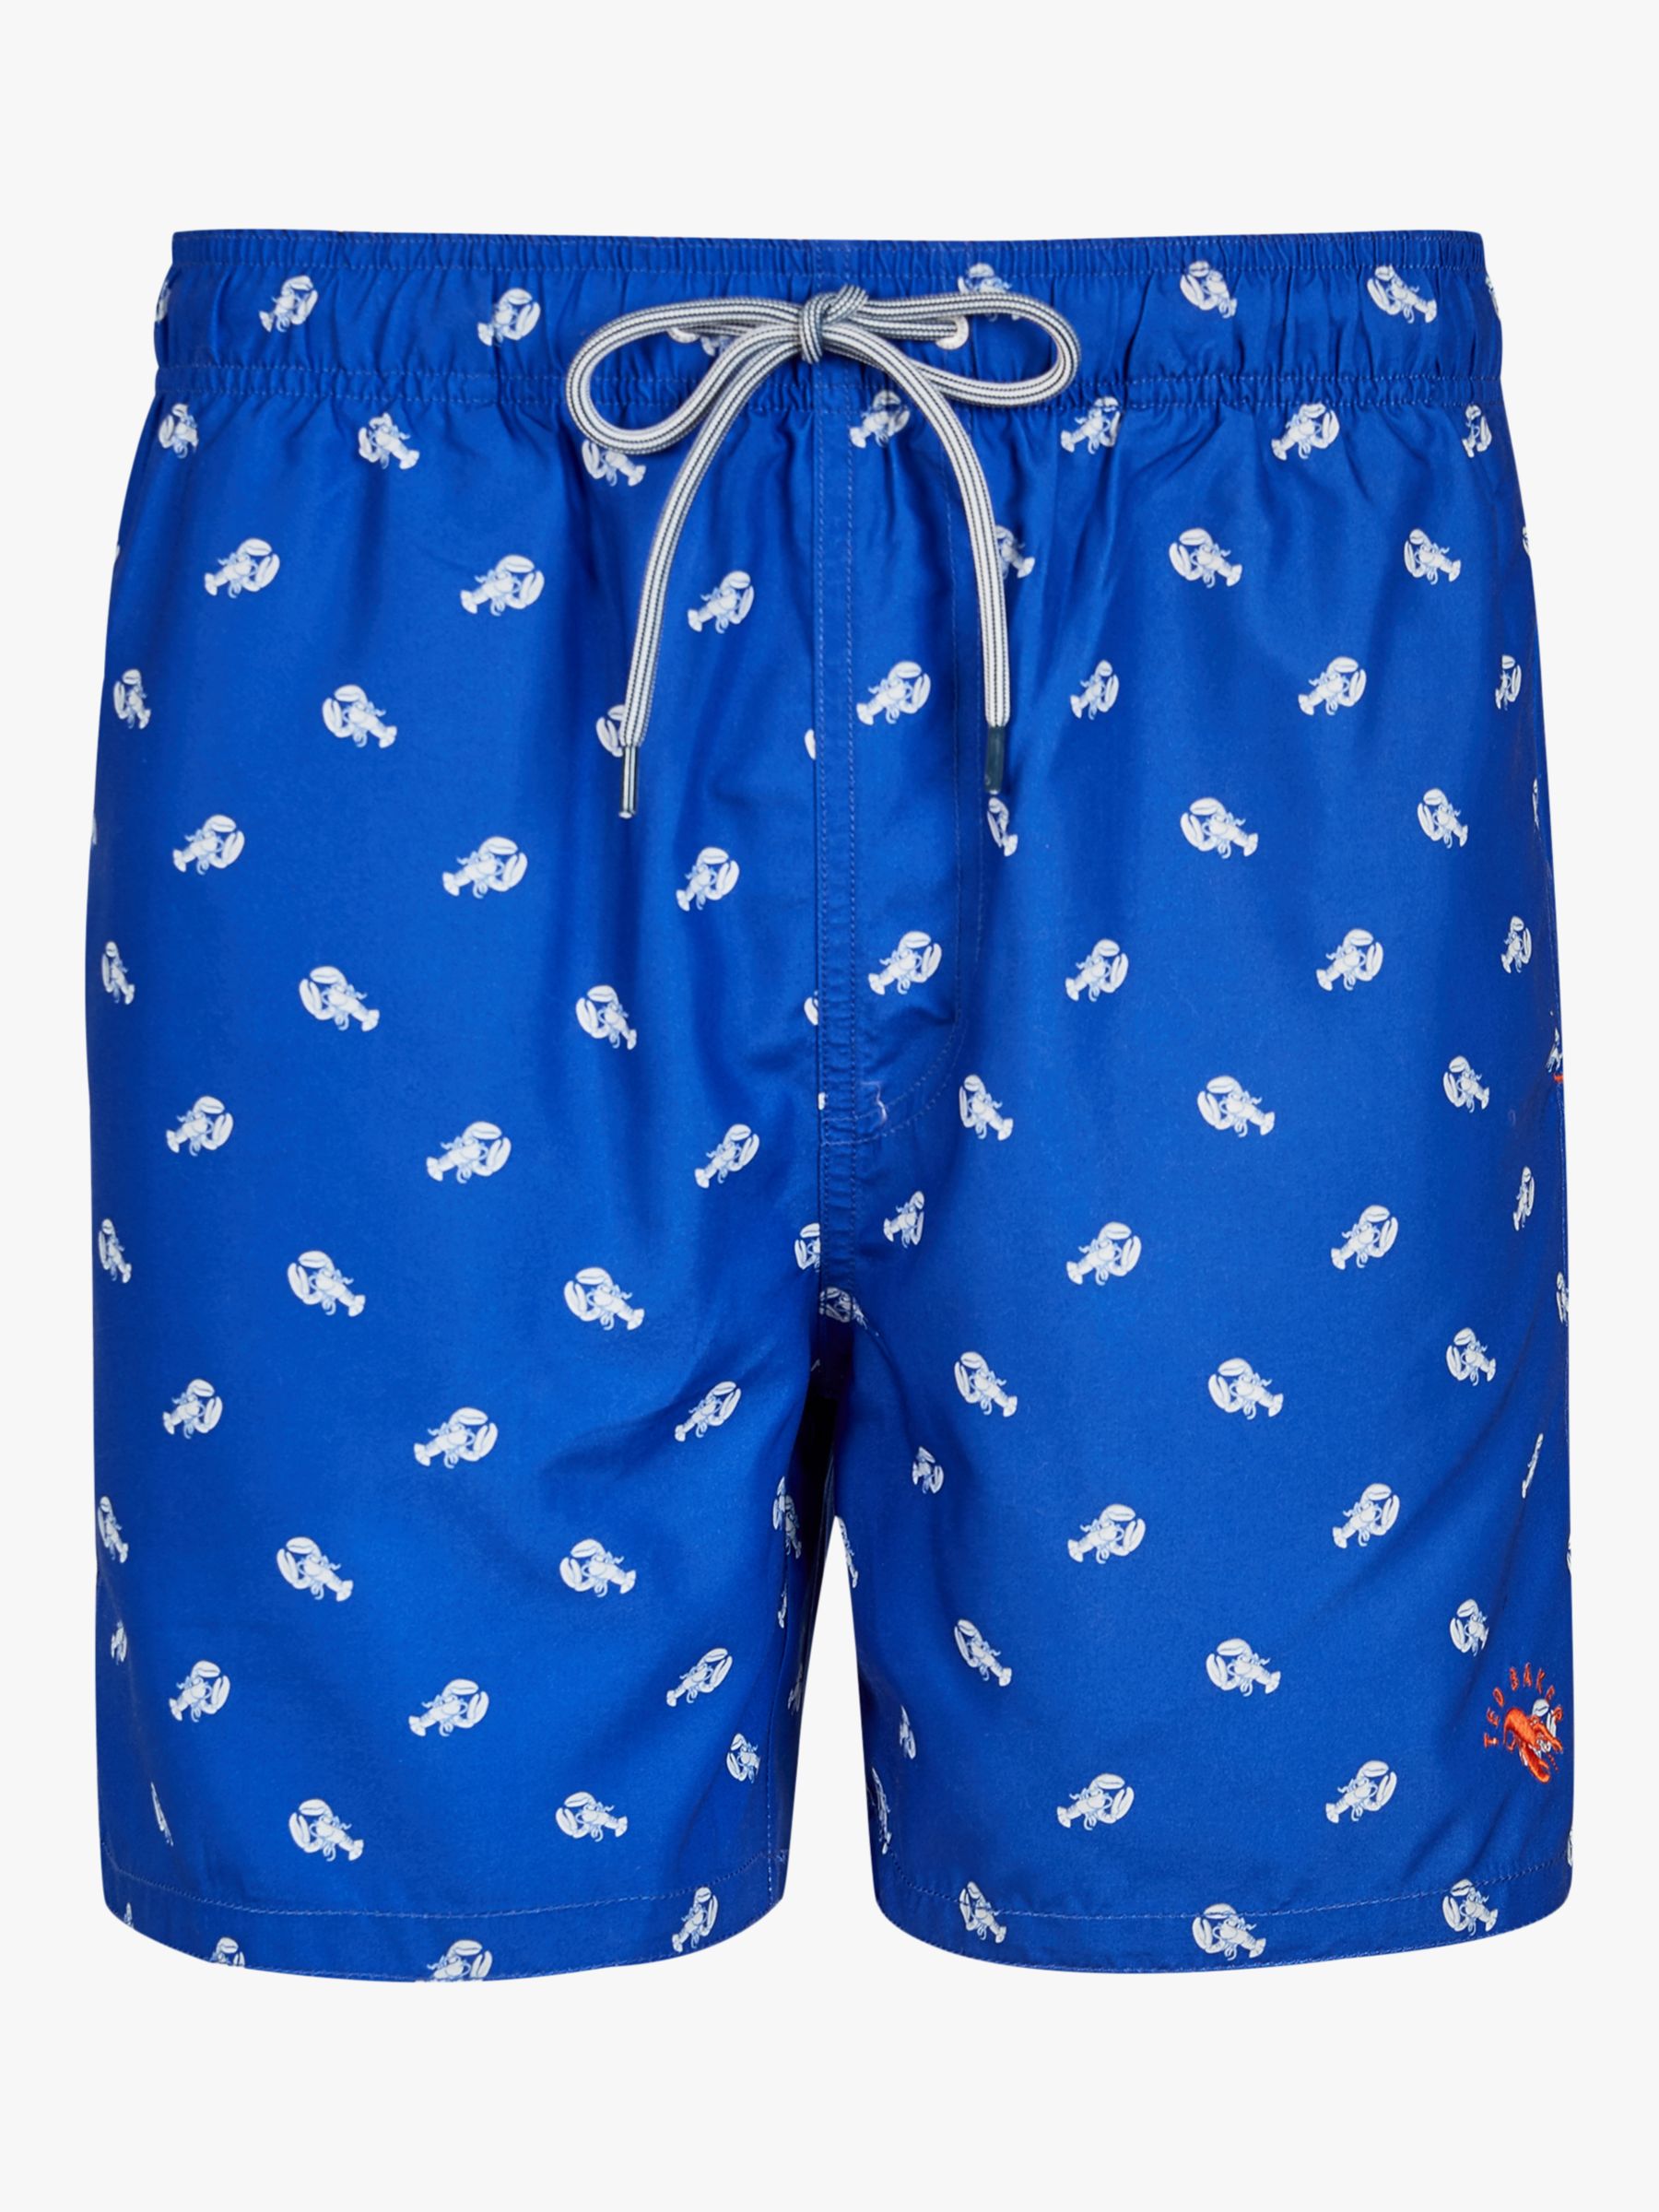 Ted Baker LOB Lobster Print Swim Shorts, Bright Blue